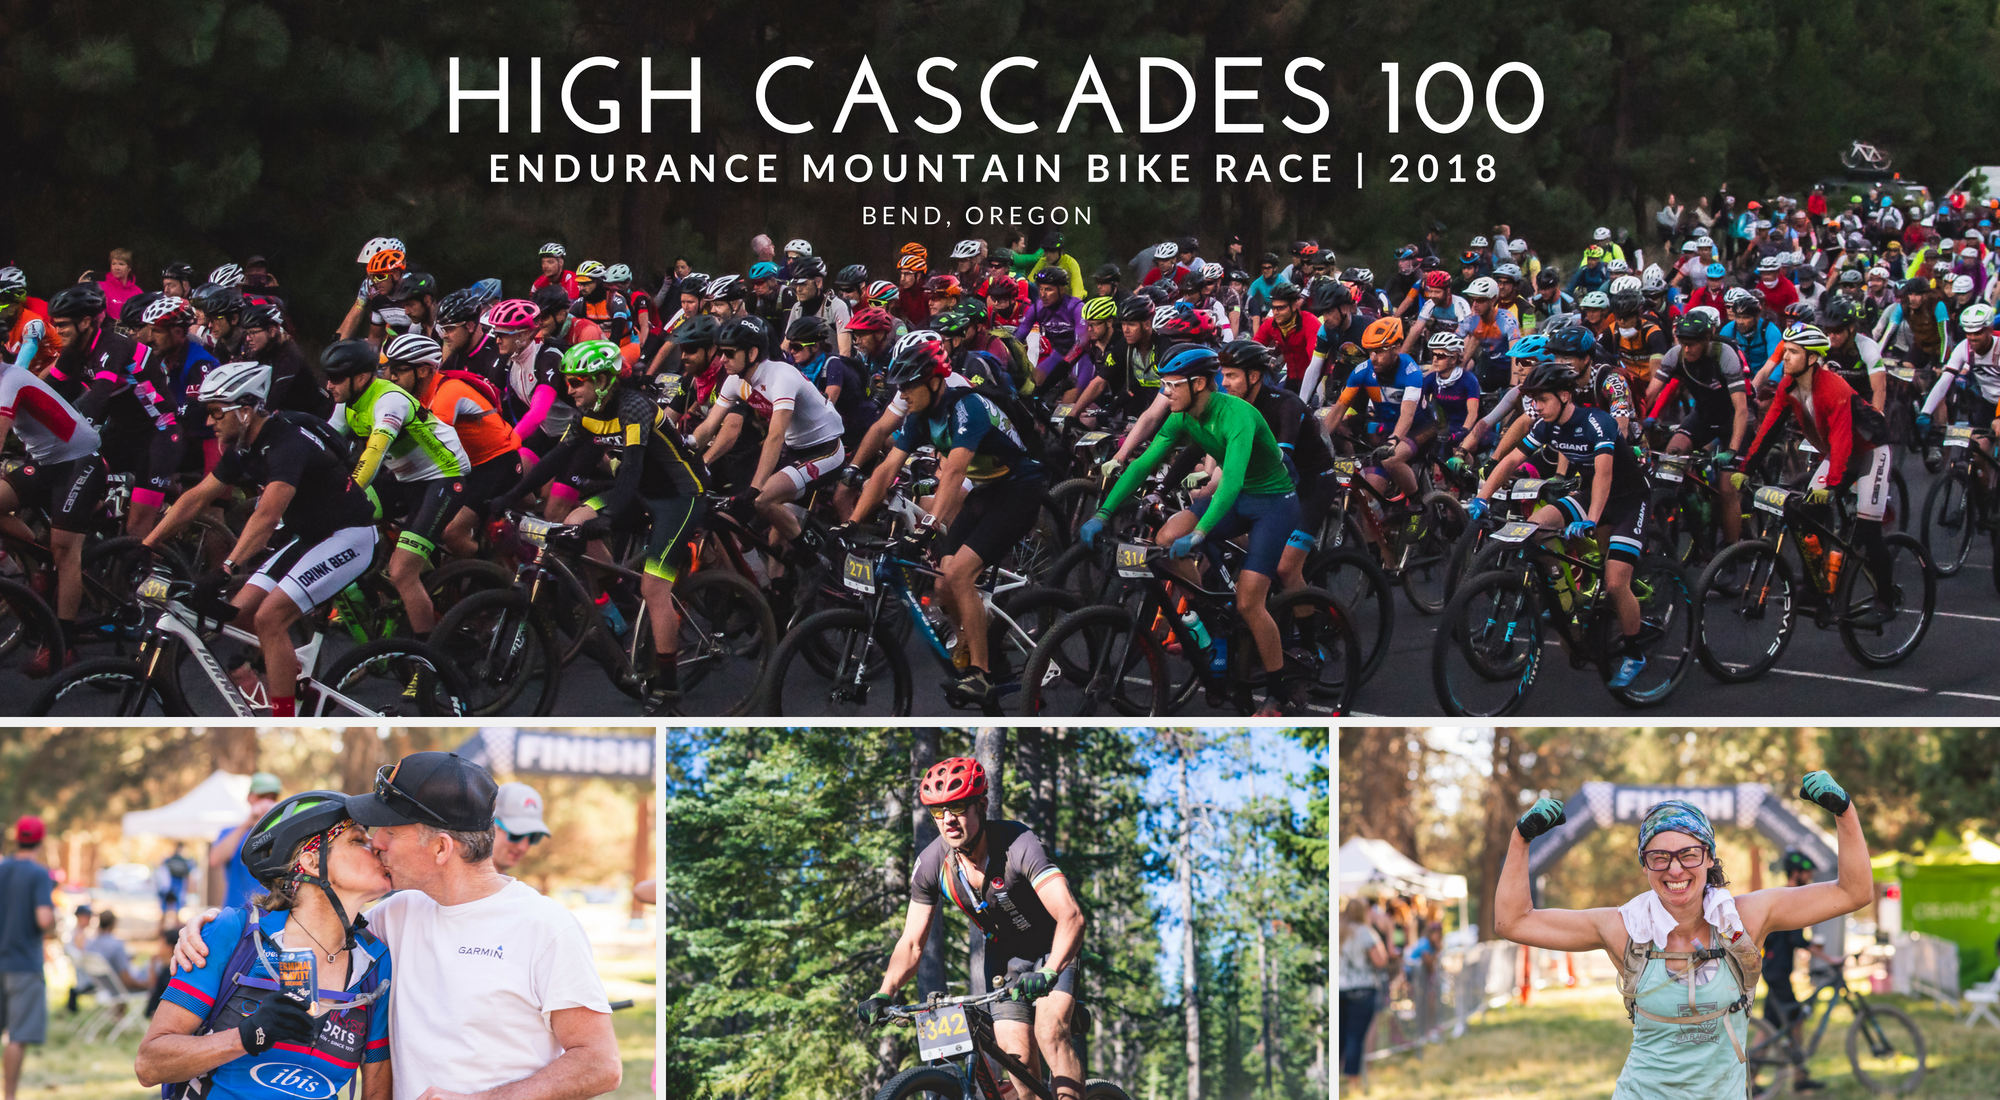 High Cascades 100, endurance mountain bike race 2018, photography by Molly Bermea at FrizzStudio.com